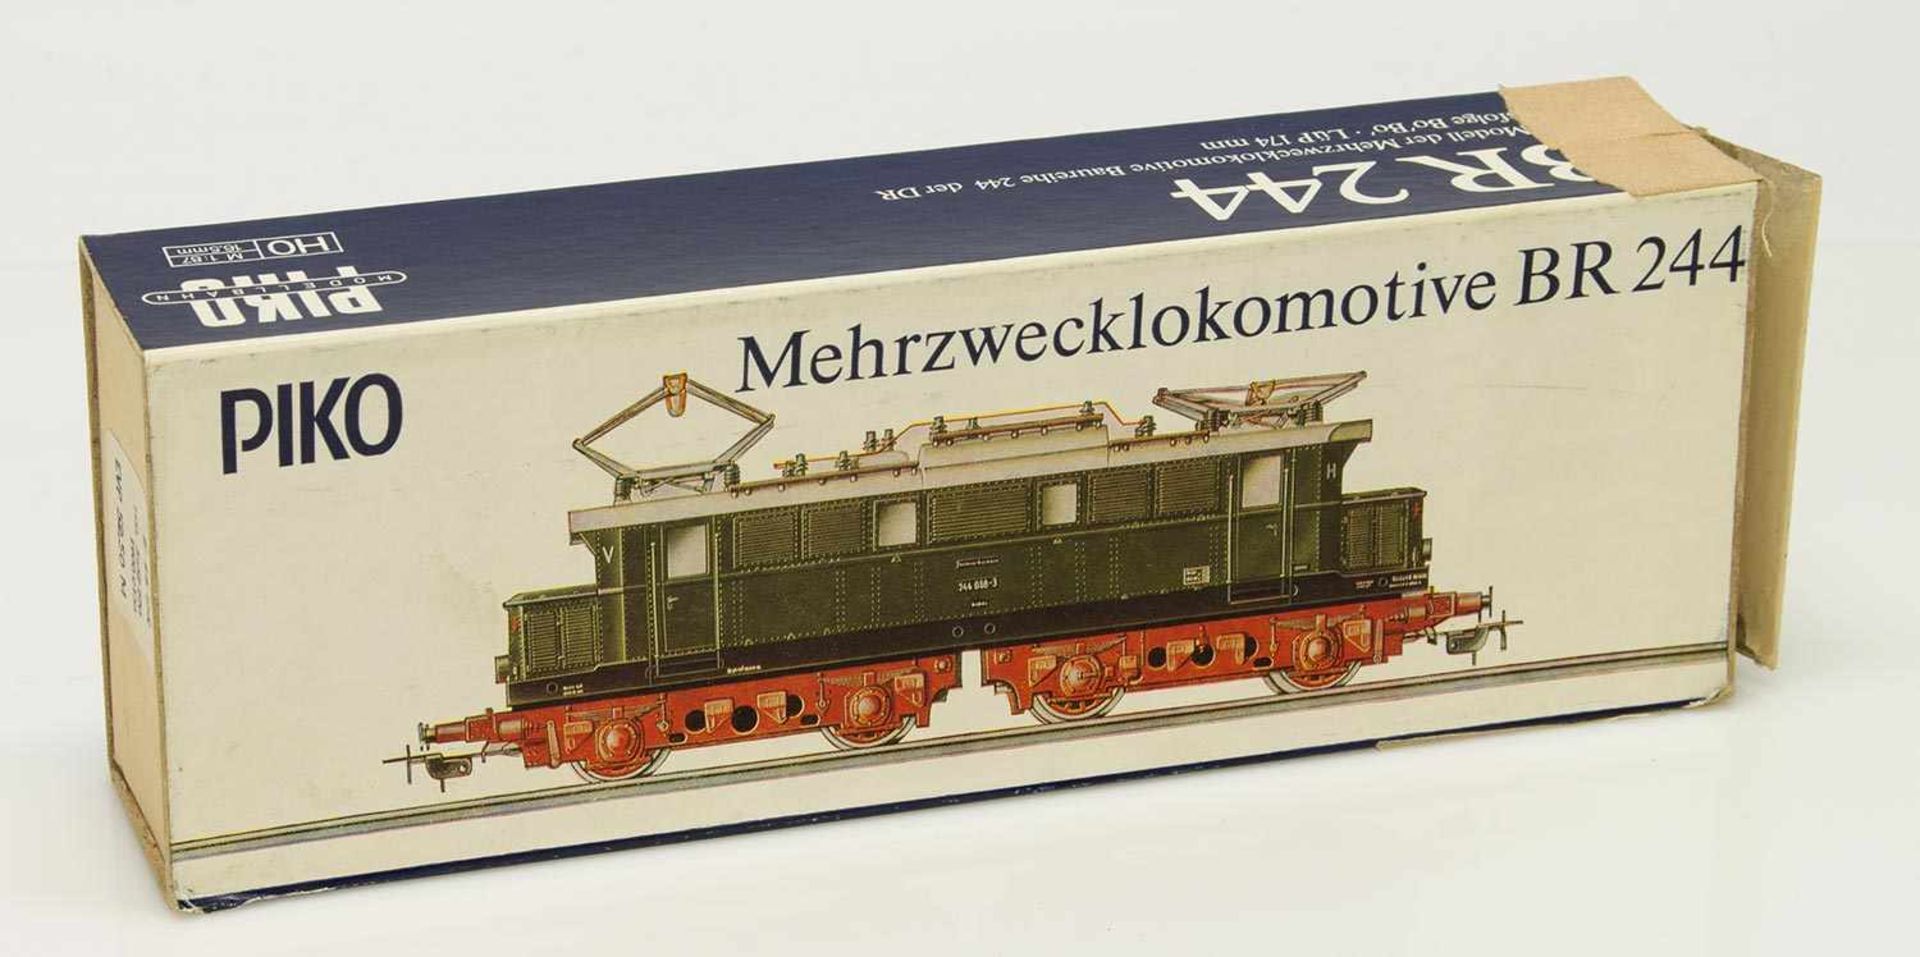 Modellbahn Mehrzwecklokomotive BR 244 170Piko, Spur H0, Maßstab 1:87, bespielt